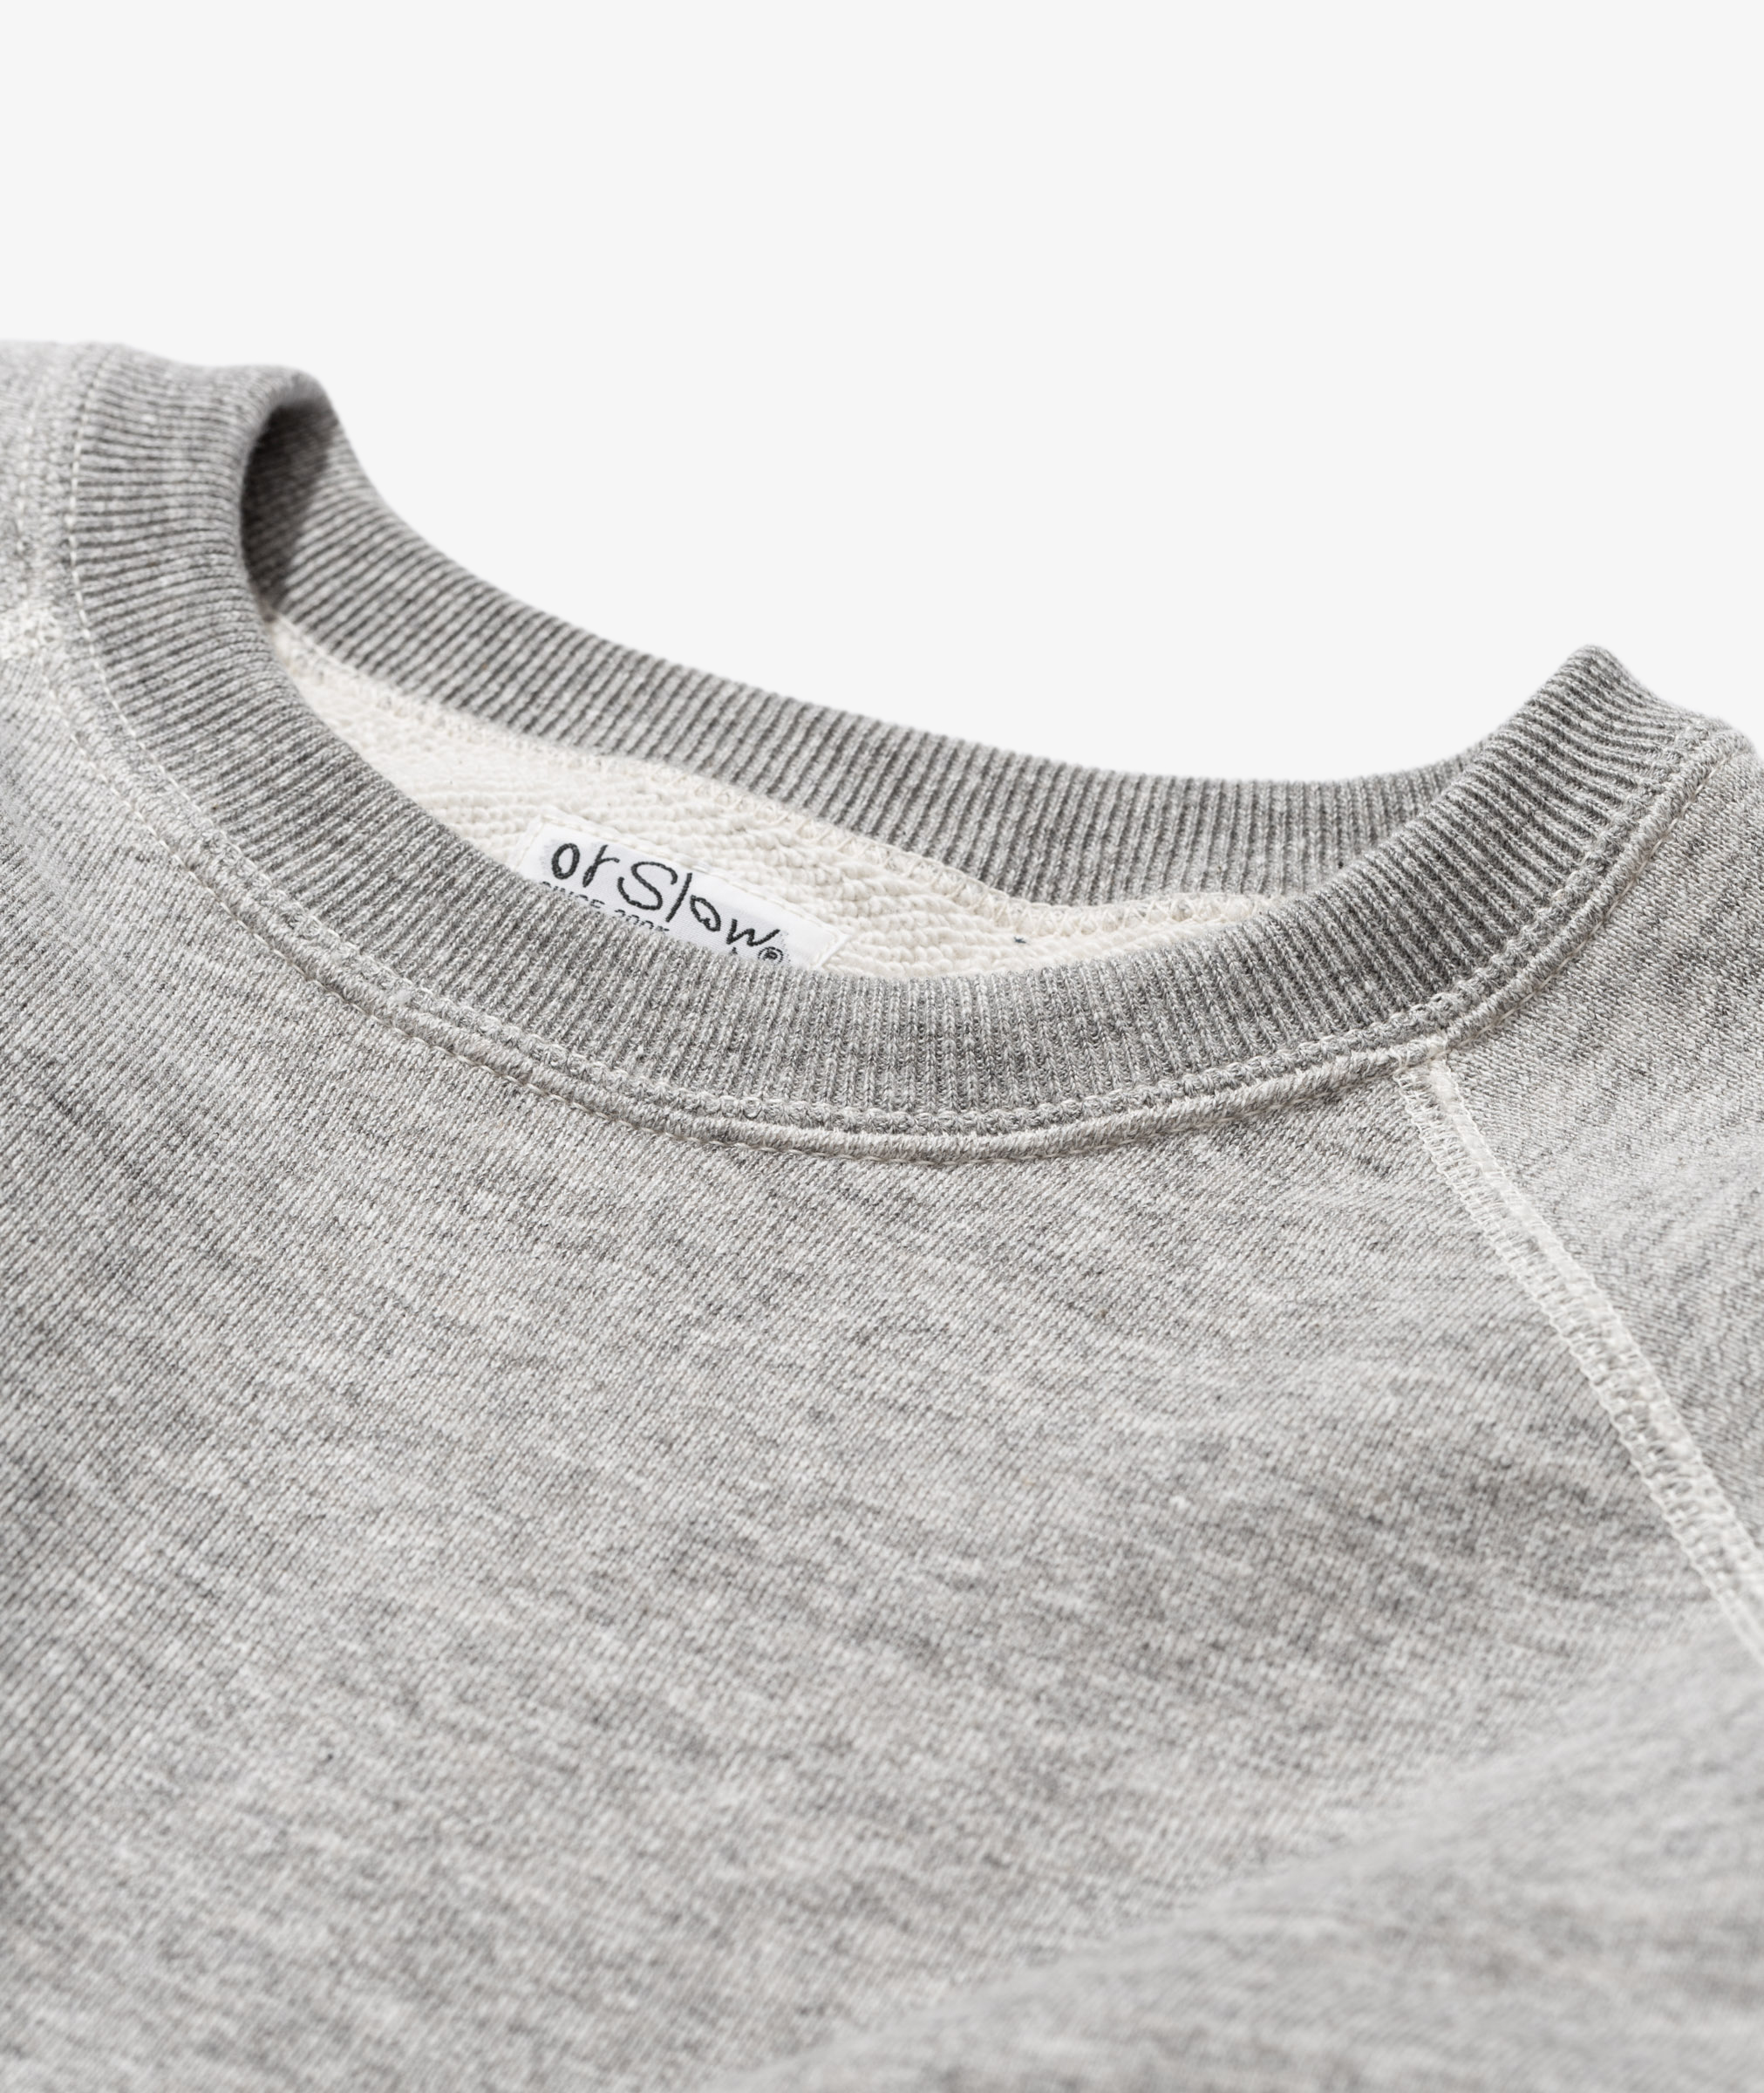 Norse Store | Shipping Worldwide - Sweatshirts - orSlow - Sweatshirt